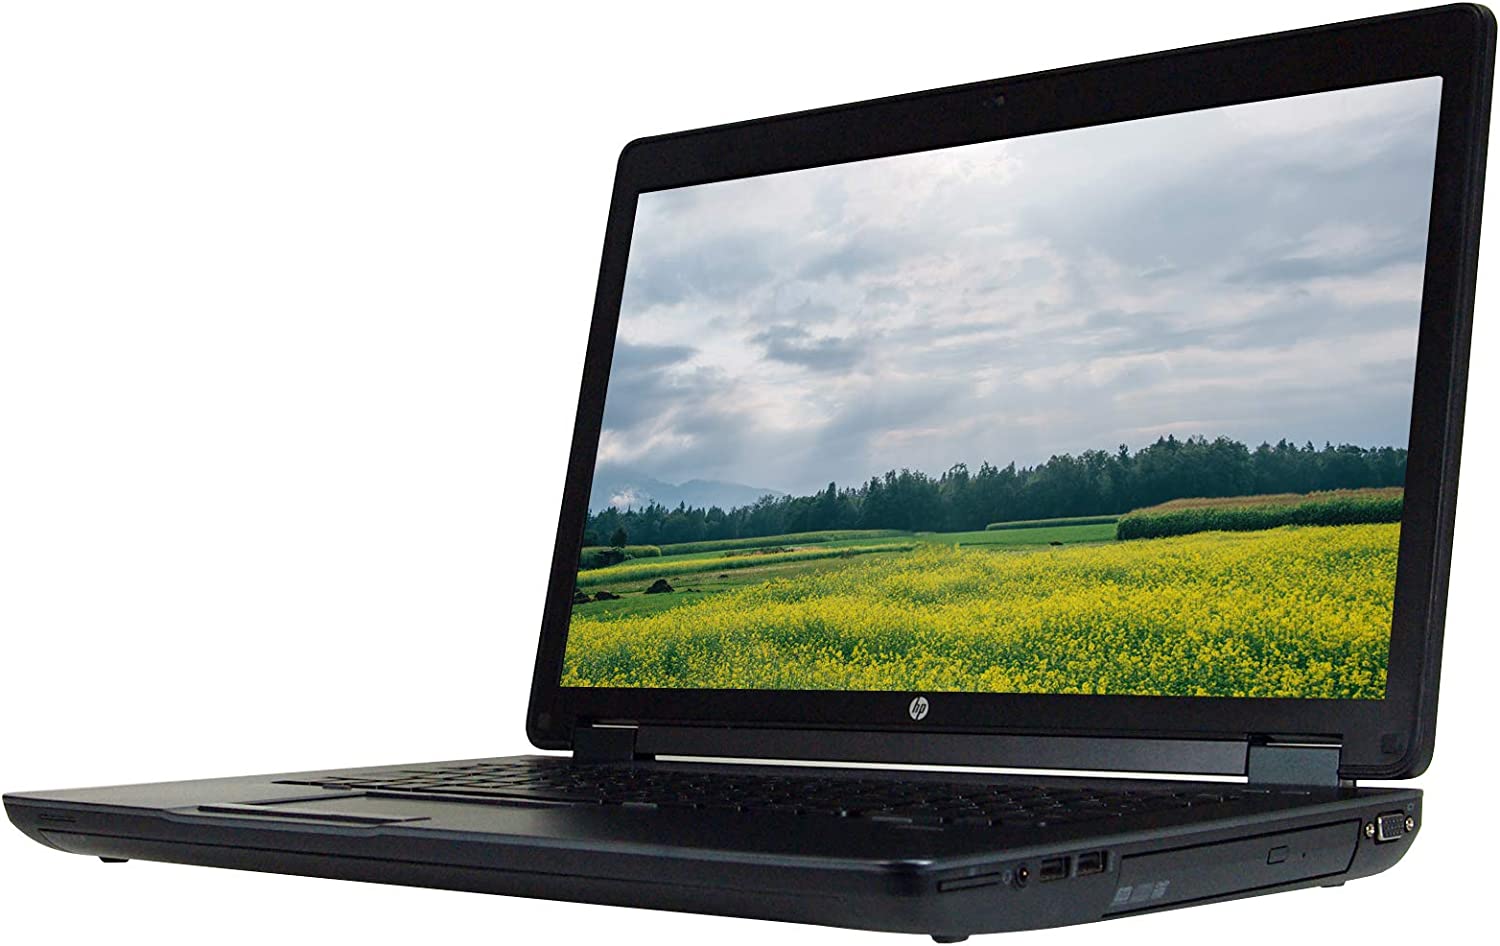 HP Probook 17 G2 Core i7-4710MQ 2.50 GHZ , 17.3 inches hd display windows 10 Pro (Renewed)